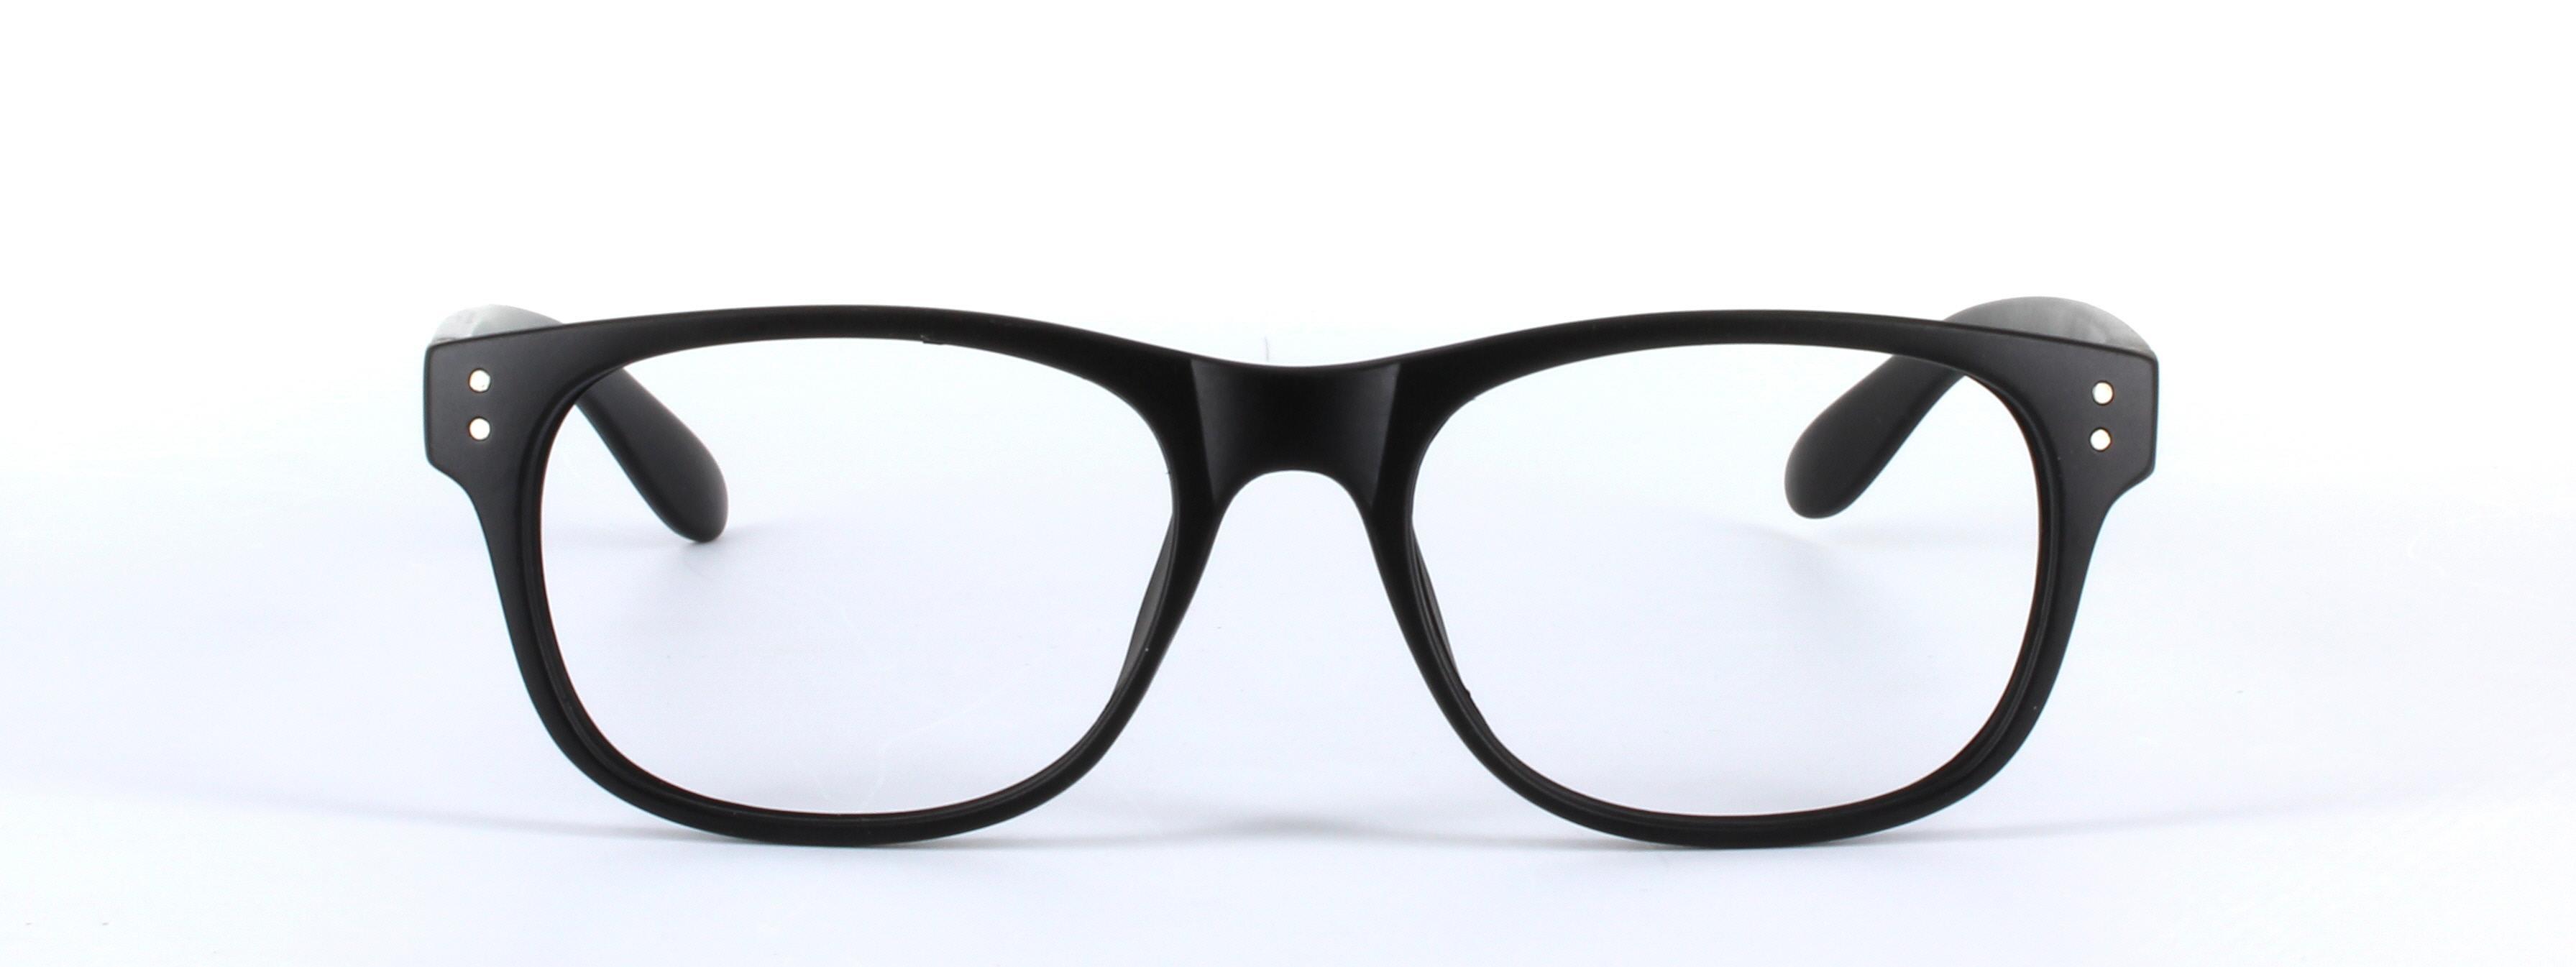 Brazil Black Full Rim Oval Plastic Glasses - Image View 5